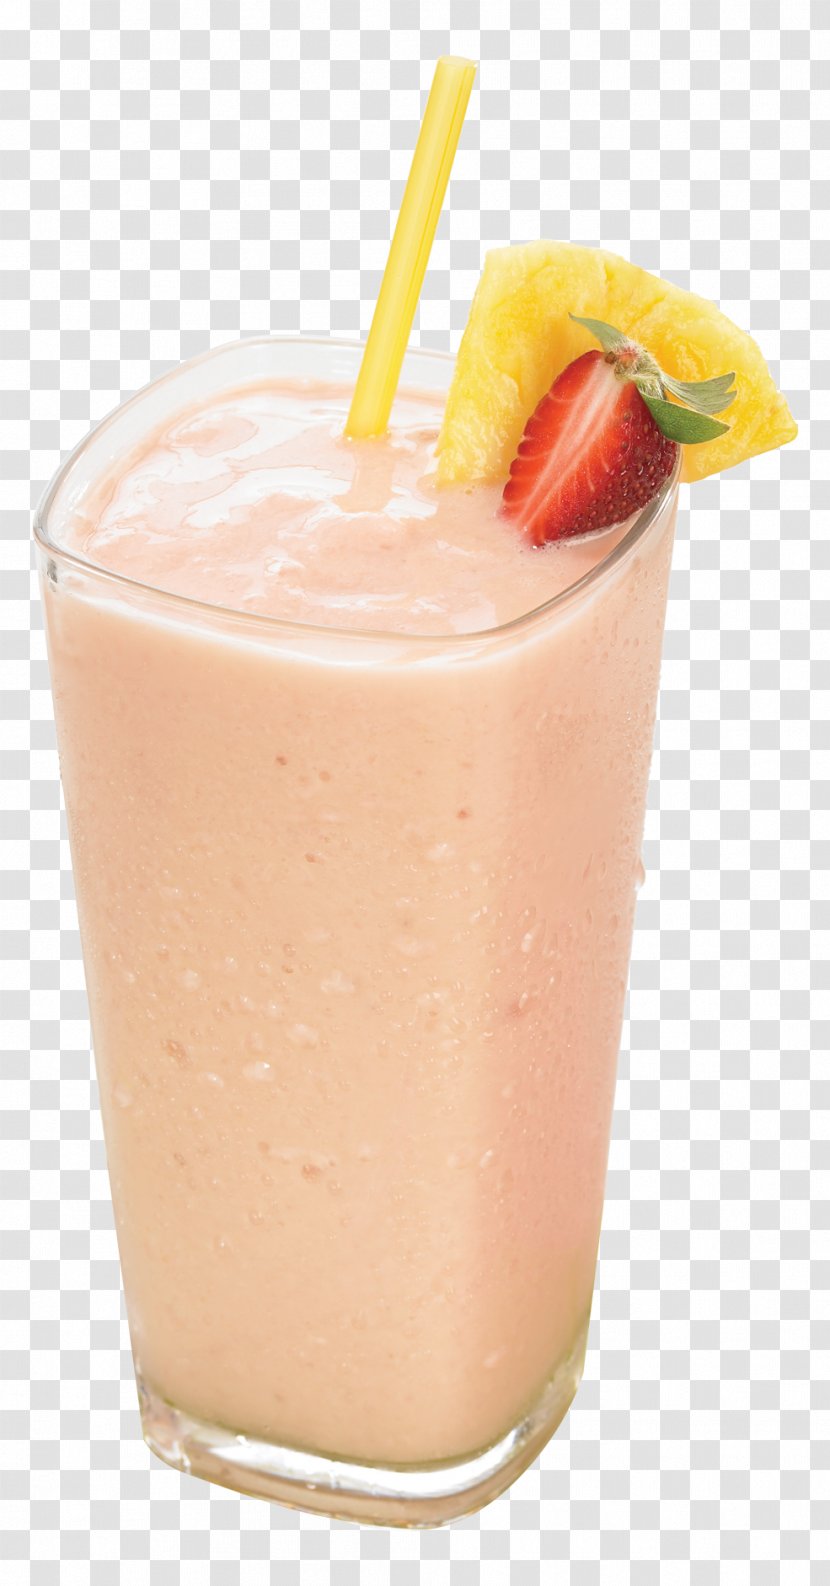 Strawberry Juice Smoothie Health Shake Milkshake Piña Colada Transparent PNG